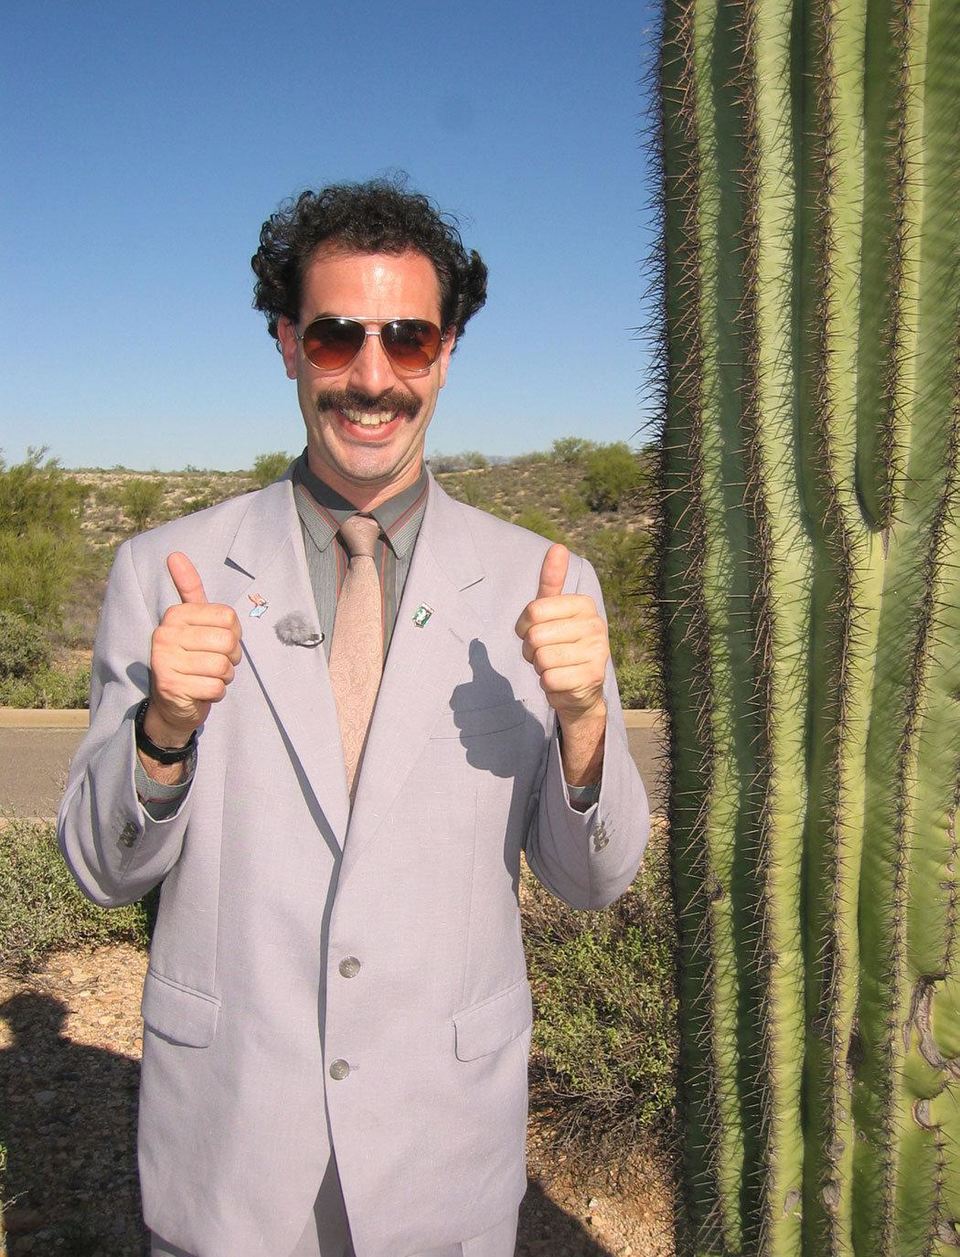 Film Borat: Nakoukání do amerycké kultůry na obědnávku slavnoj kazašskoj národu